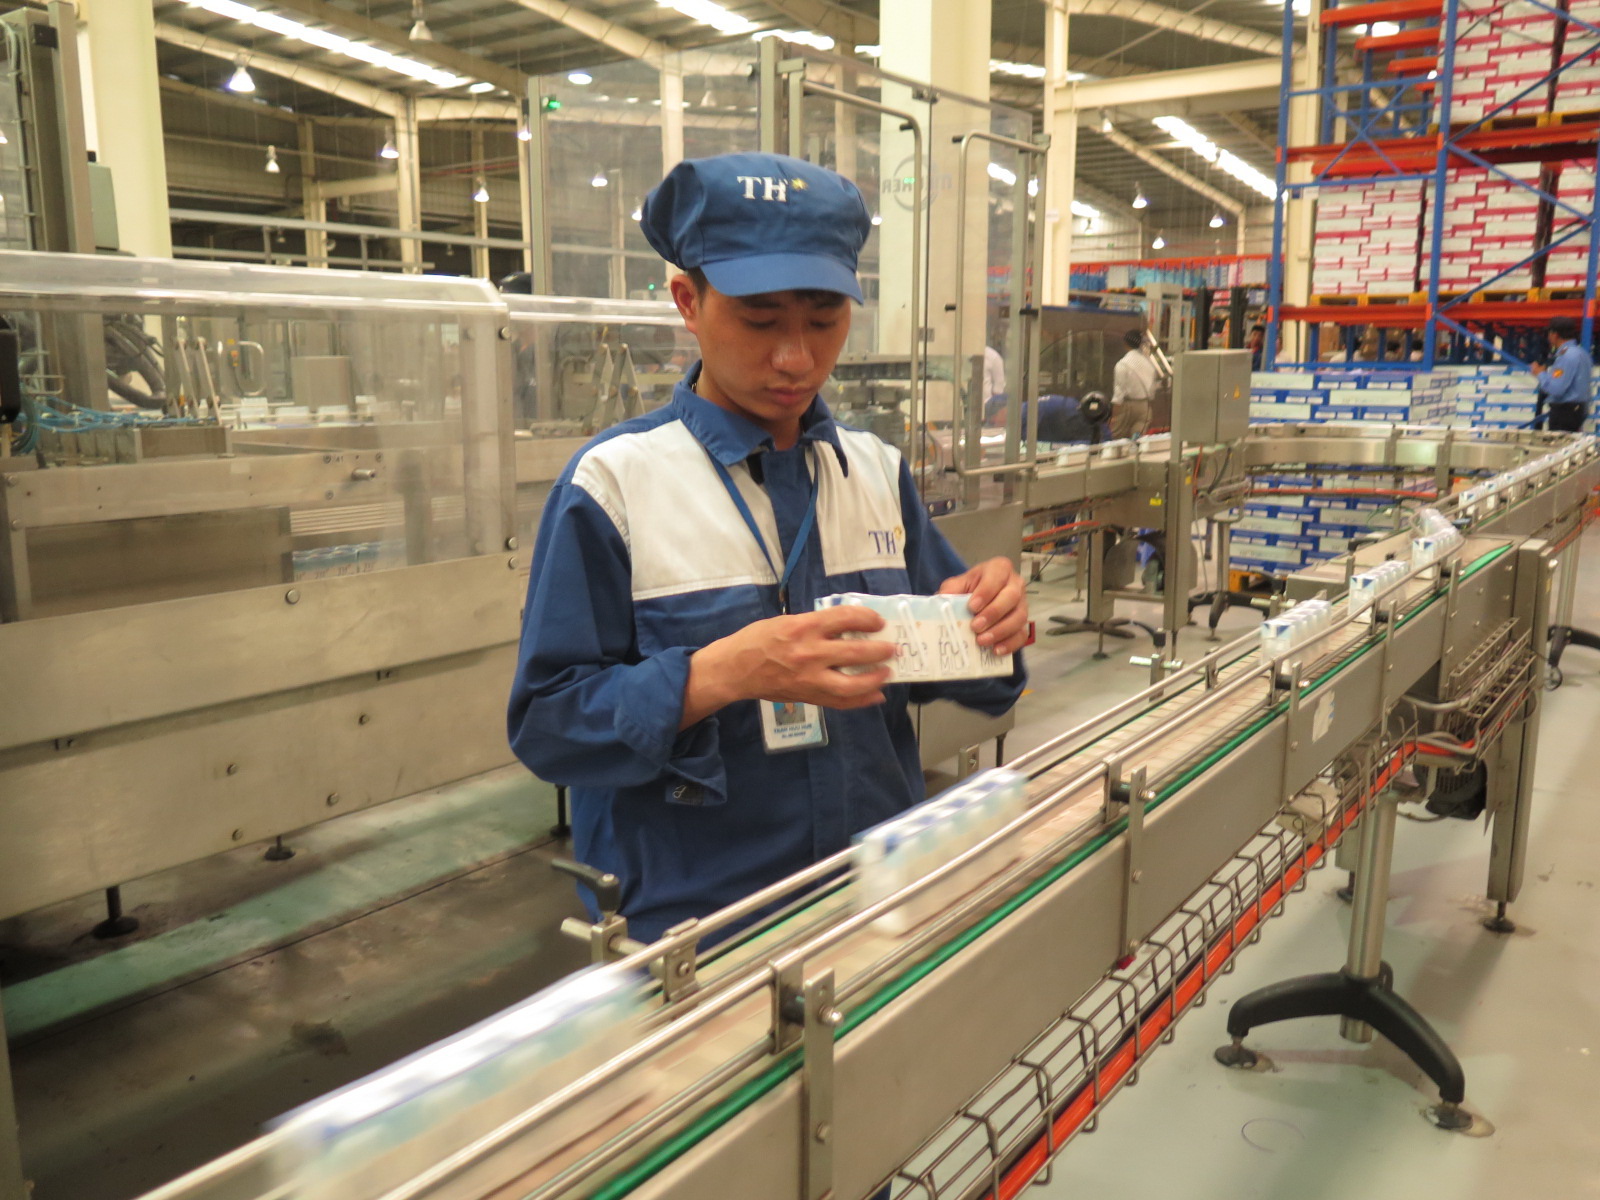                                   TH牛奶厂是乂安省西部的有效投资项目。越通社记者阮文日 摄      